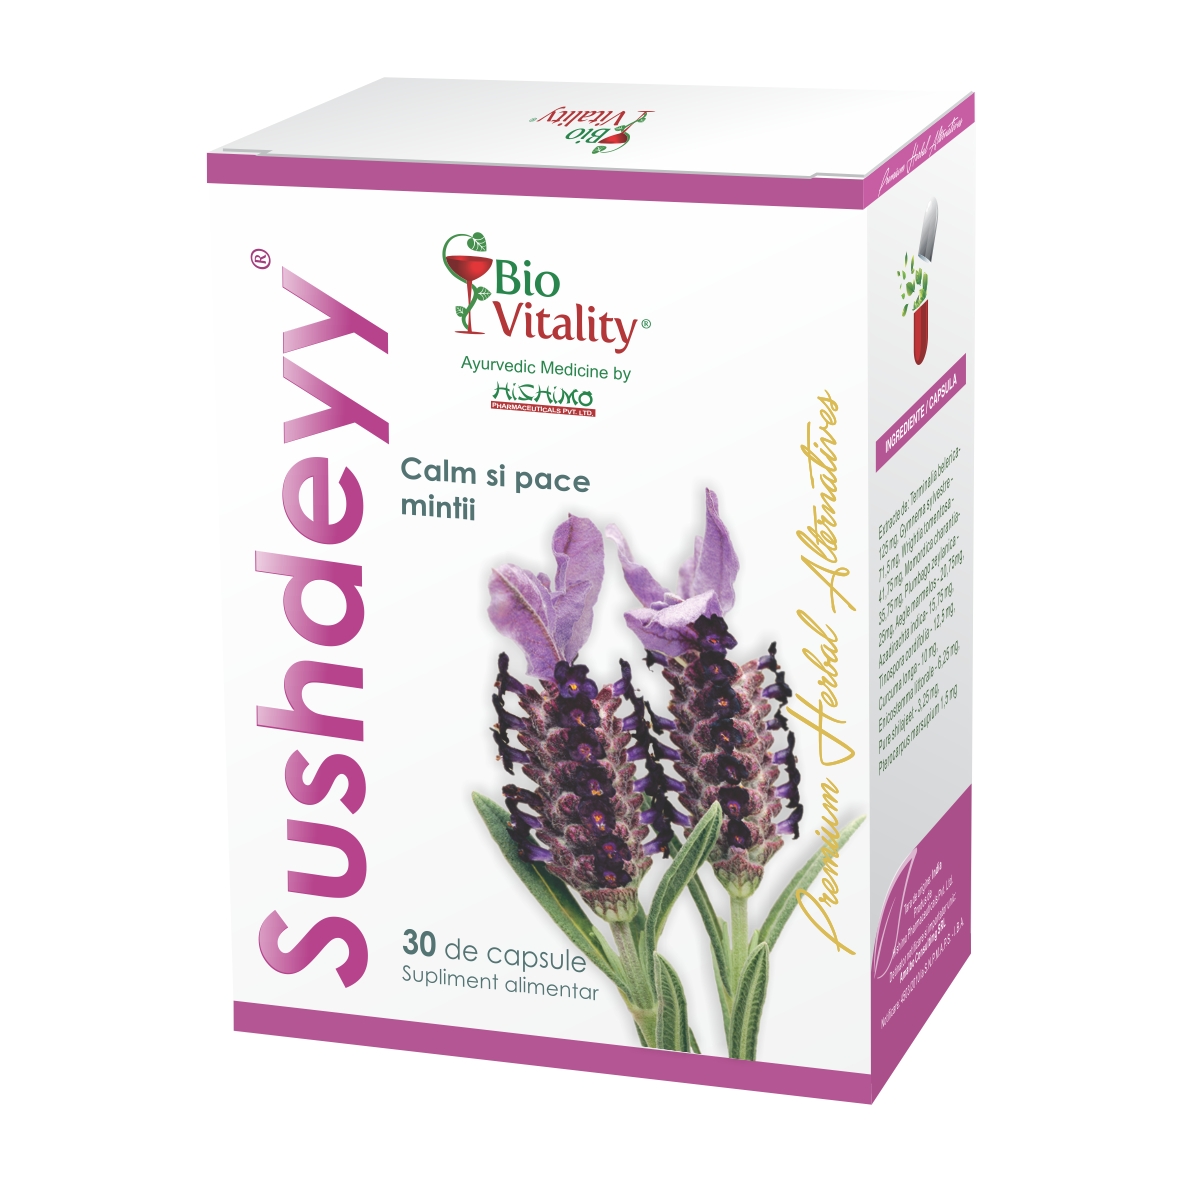 SUSHDEYY 30 CAPSULE Bio Vitality